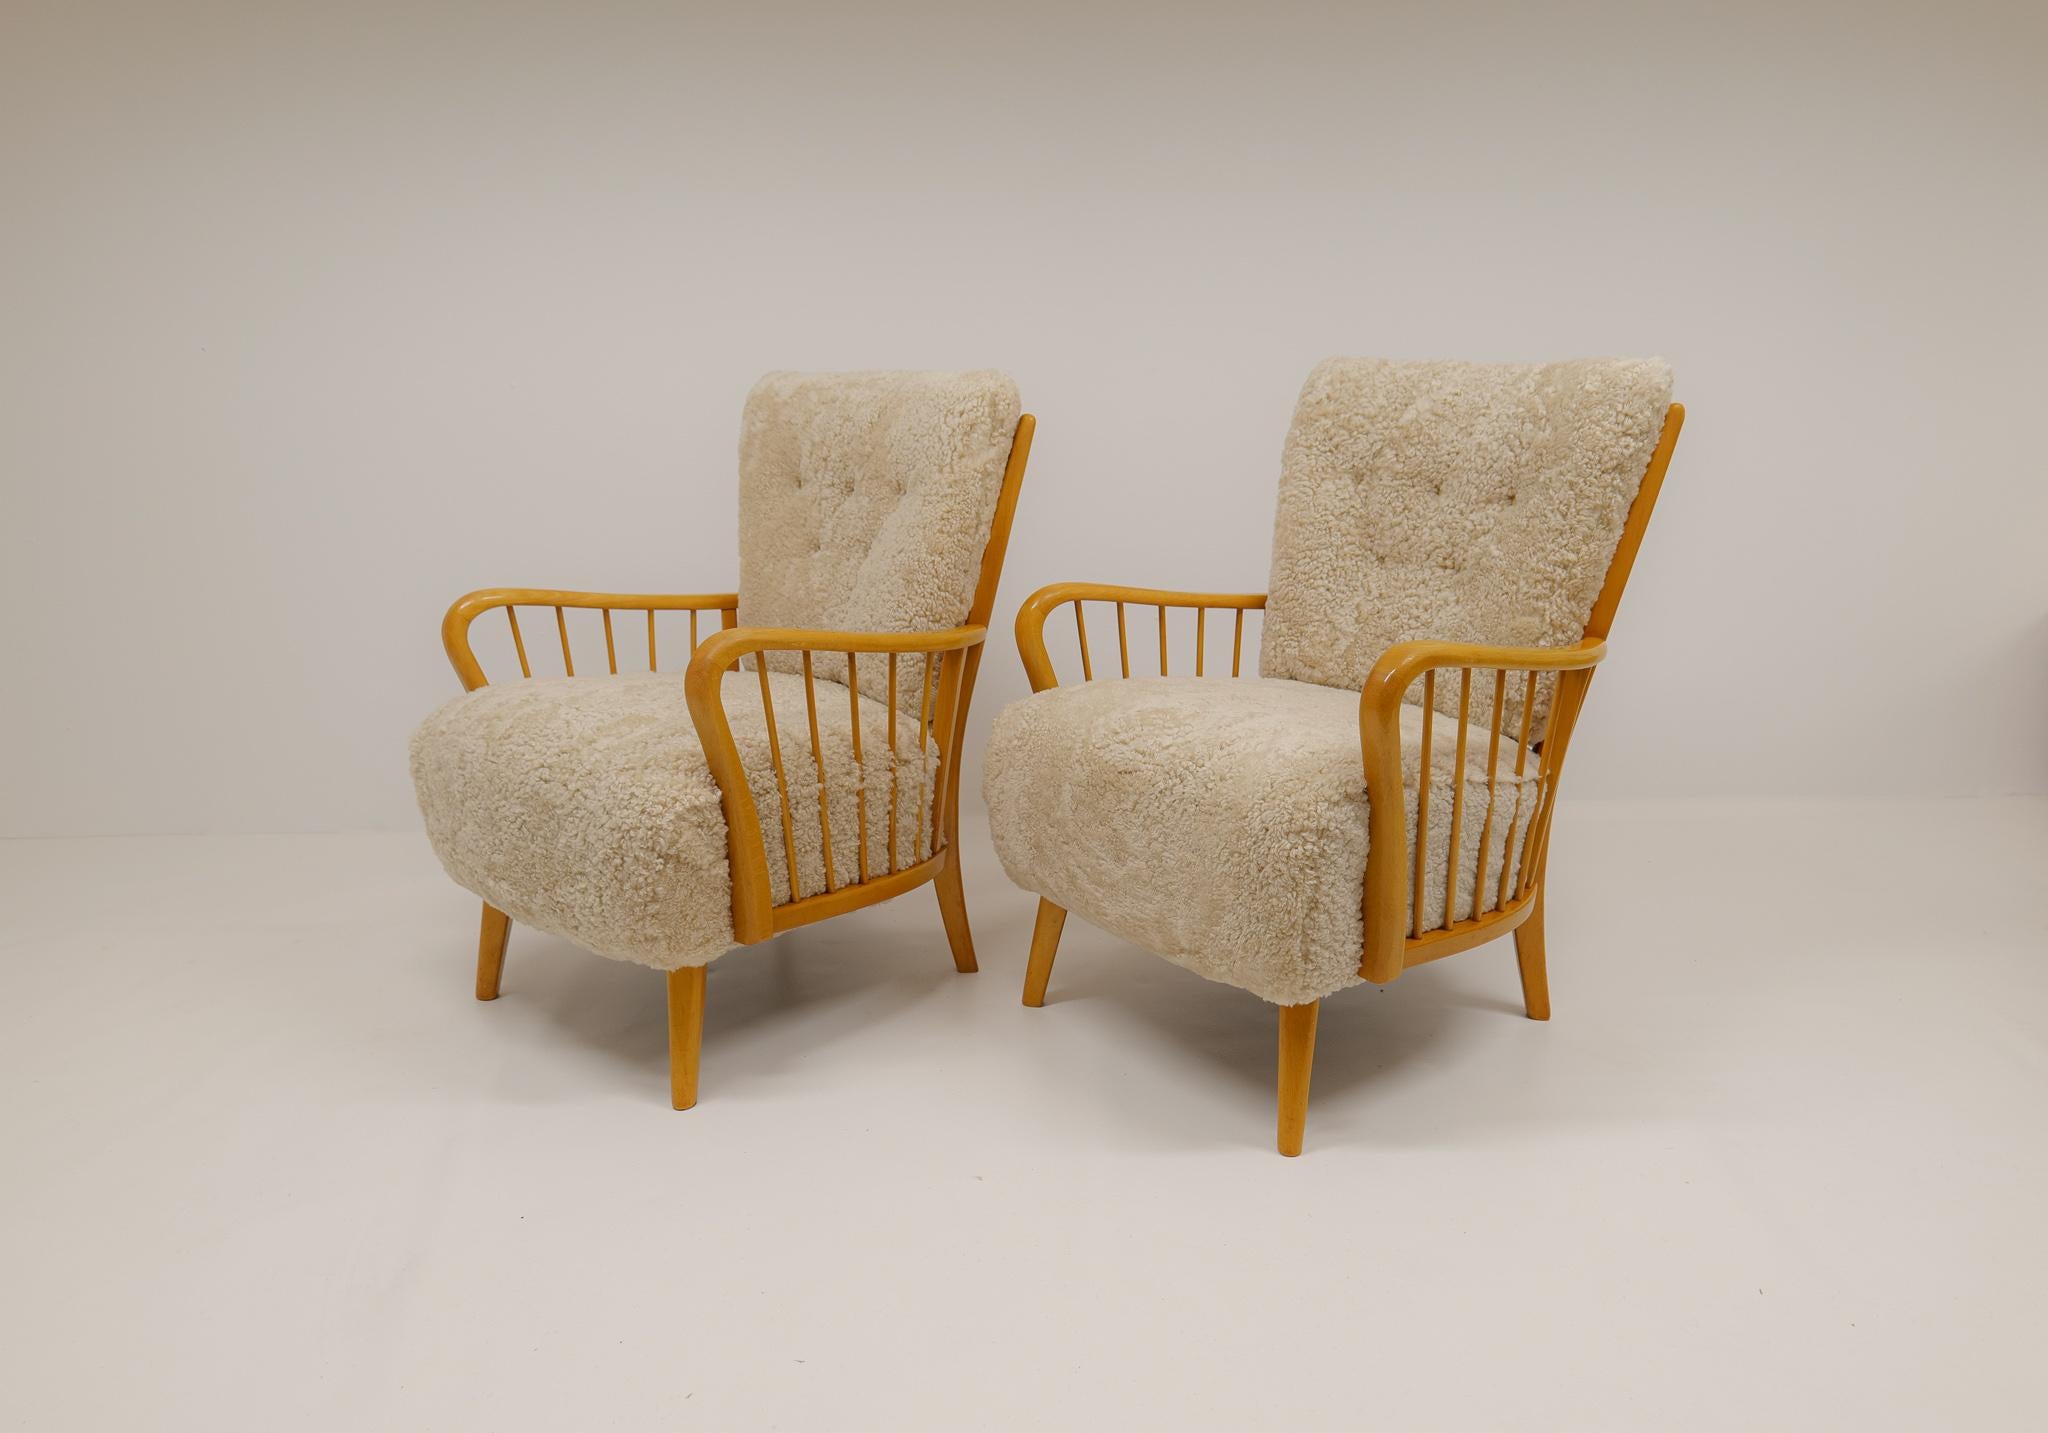 Mid-20th Century Art Deco Swedish Grace Lounge Chairs in Shearling / Sheepskin 1940s Sweden